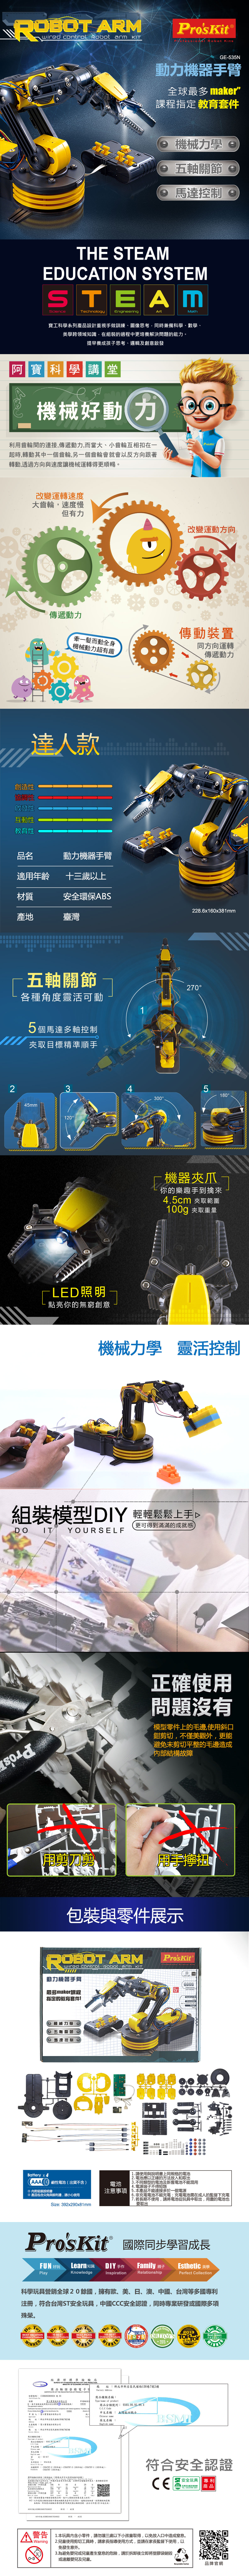 WIRED CONTROL ROBOTARM 動力機器手臂,機械力學,五軸關節各種角度靈活可動,馬達控制,適用年齡13歲以上, 適用年齡13歲以上,安全環保ABS,台灣製造,機器夾爪4.5cm夾取範圍,100g夾取重量,LED照明設備.